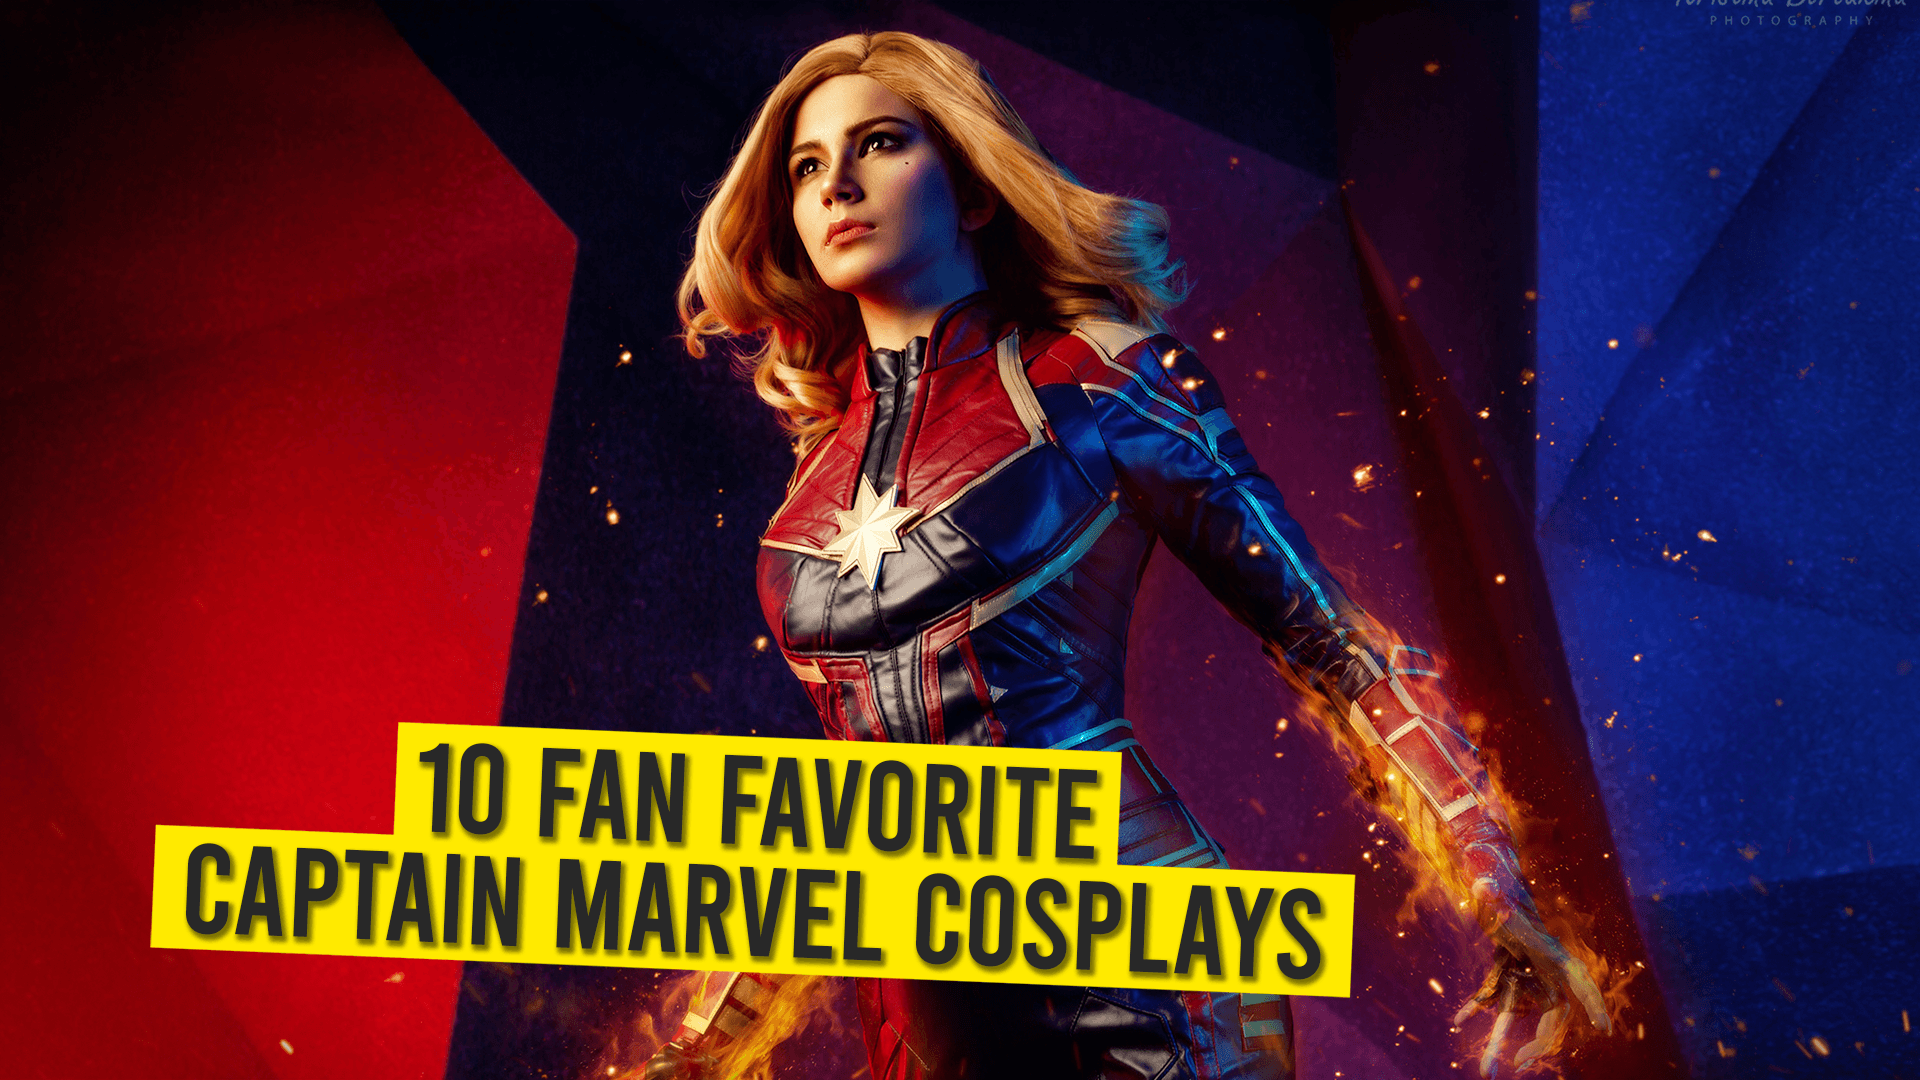 10 Fan Favorite Captain Marvel Cosplays.